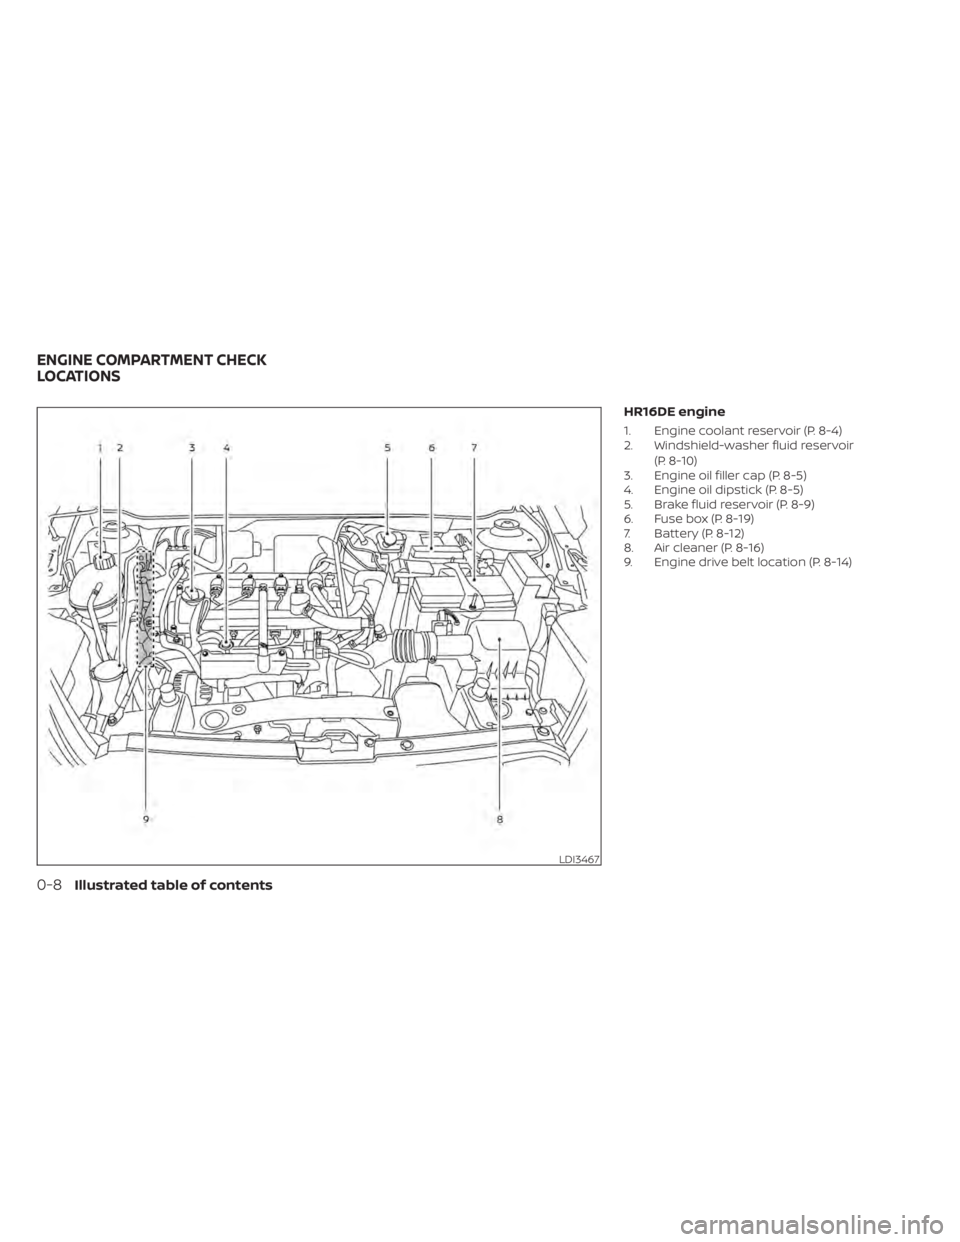 NISSAN KICKS 2022 User Guide HR16DE engine
1. Engine coolant reservoir (P. 8-4)
2. Windshield-washer fluid reservoir(P. 8-10)
3. Engine oil filler cap (P. 8-5)
4. Engine oil dipstick (P. 8-5)
5. Brake fluid reservoir (P. 8-9)
6. 